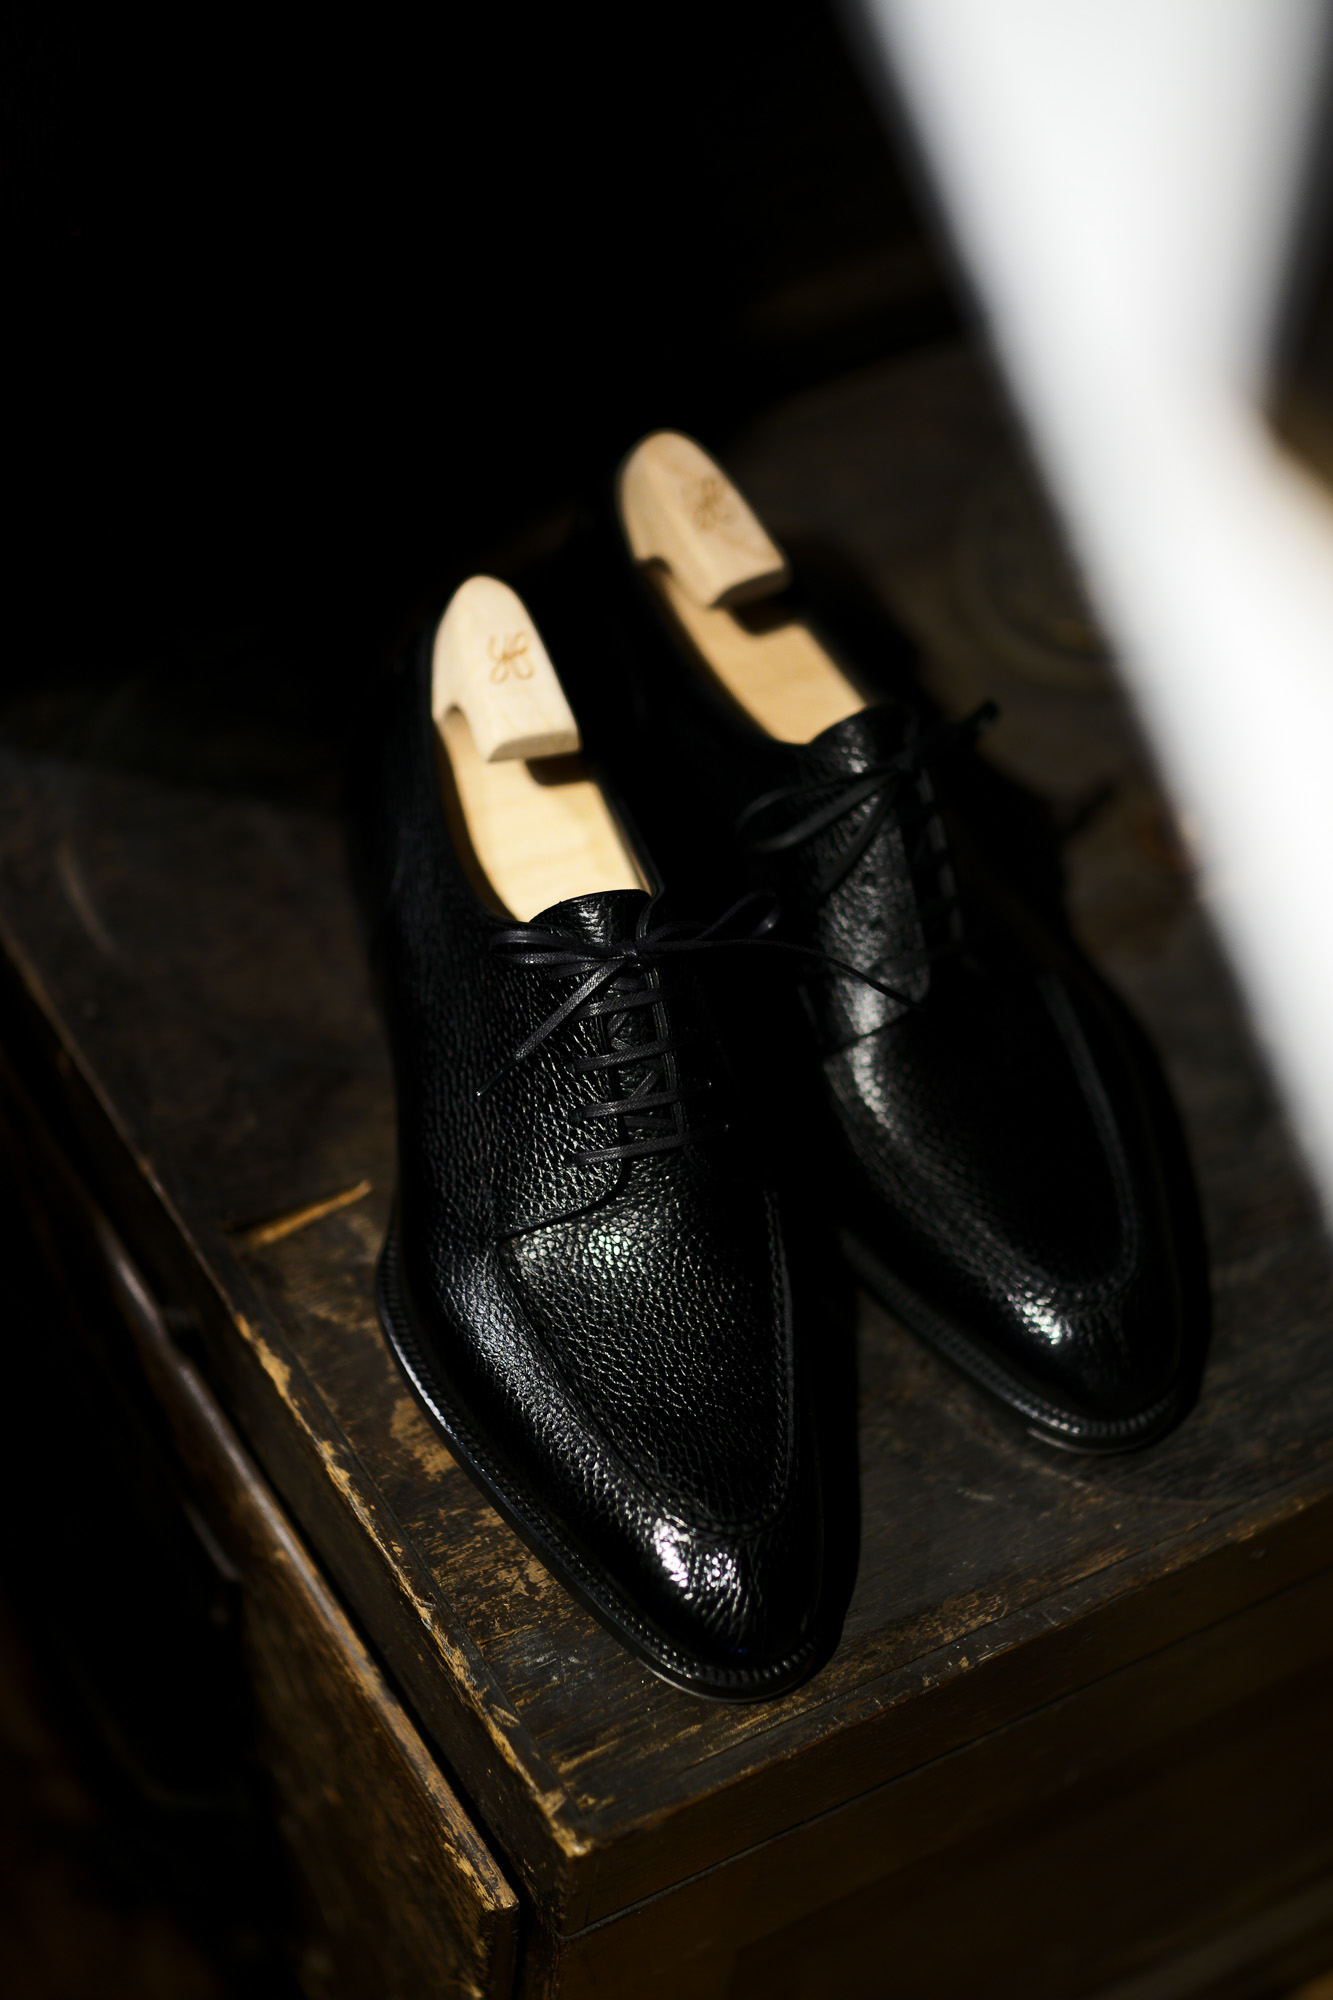 Yohei Fukuda "MTO" Split Toe Derby Shoes Black Big Grain 2021 ヨウヘイフクダ スプリットトゥーダービーシューズ ドレスシューズ 愛知 名古屋 Alto e Diritto altoediritto アルトエデリット Half Rubber Round Toe High Shine シューツリー